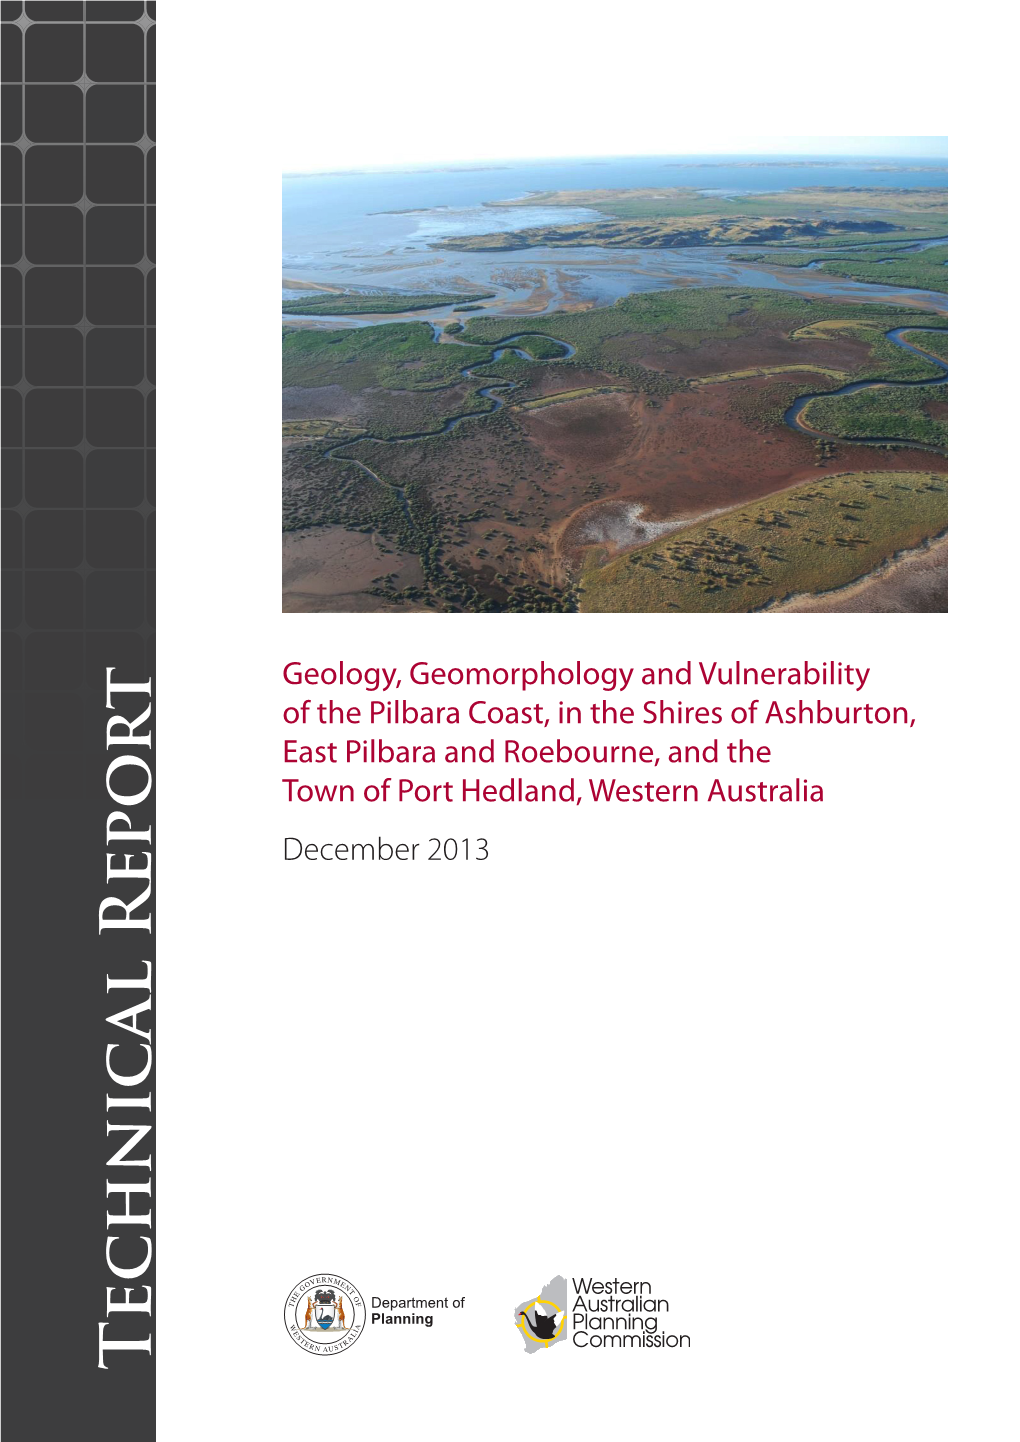 Geology, Geomorphology and Vulnerability of the Pilbara Coast, In